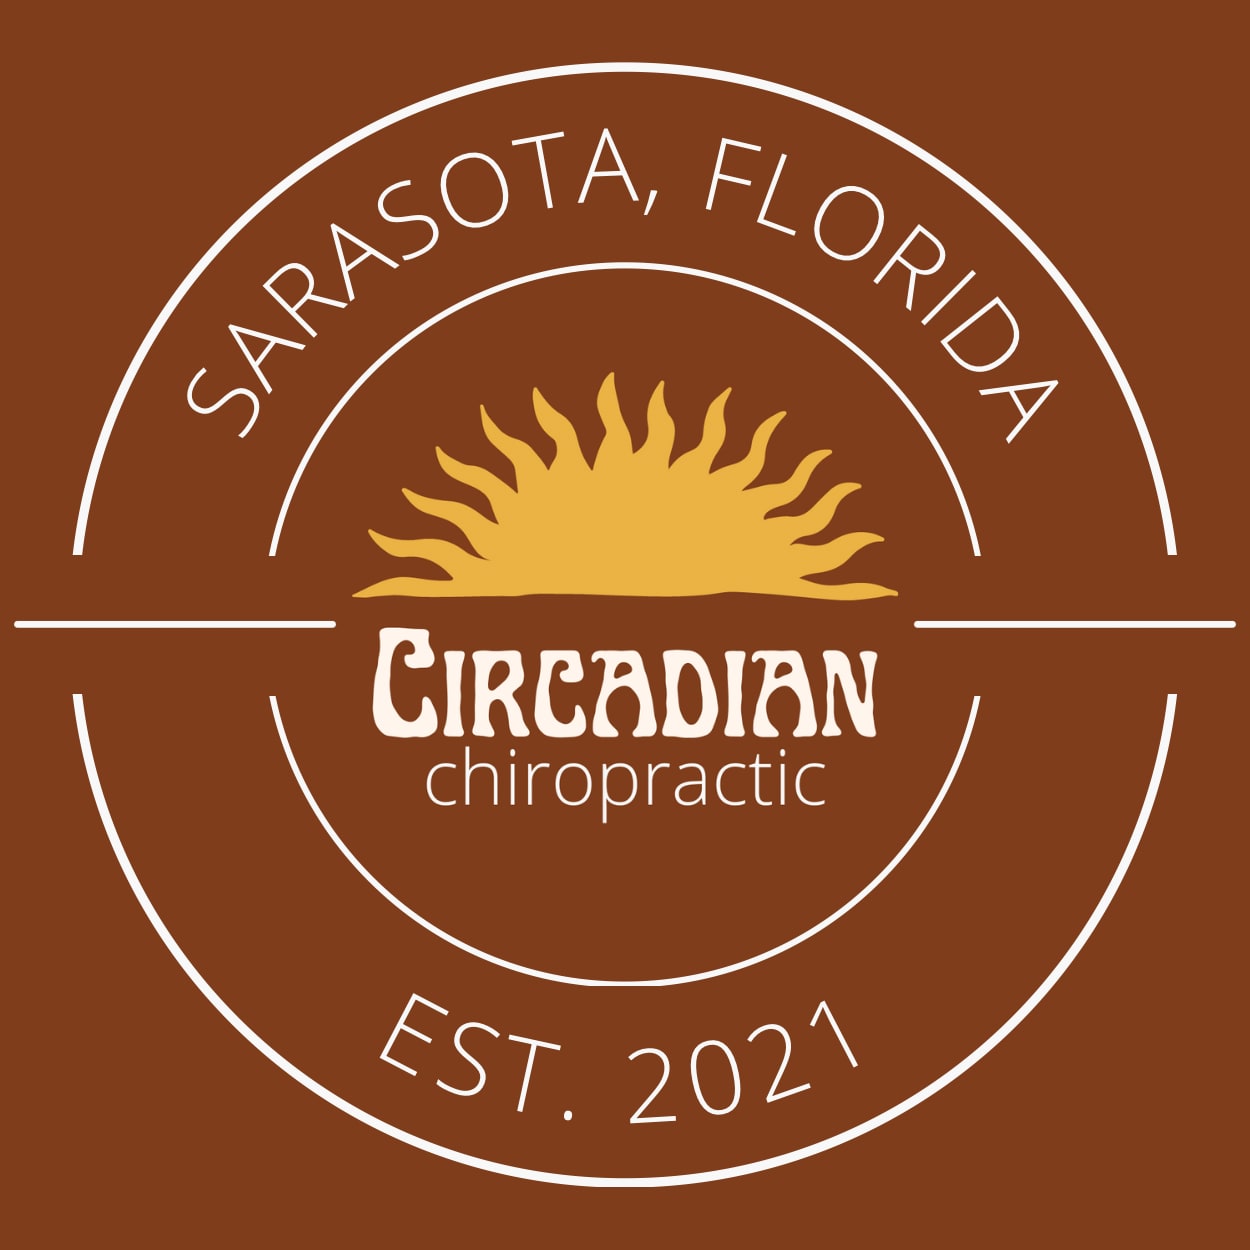 Circadian logo at CitySide Apartments in Sarasota, Florida